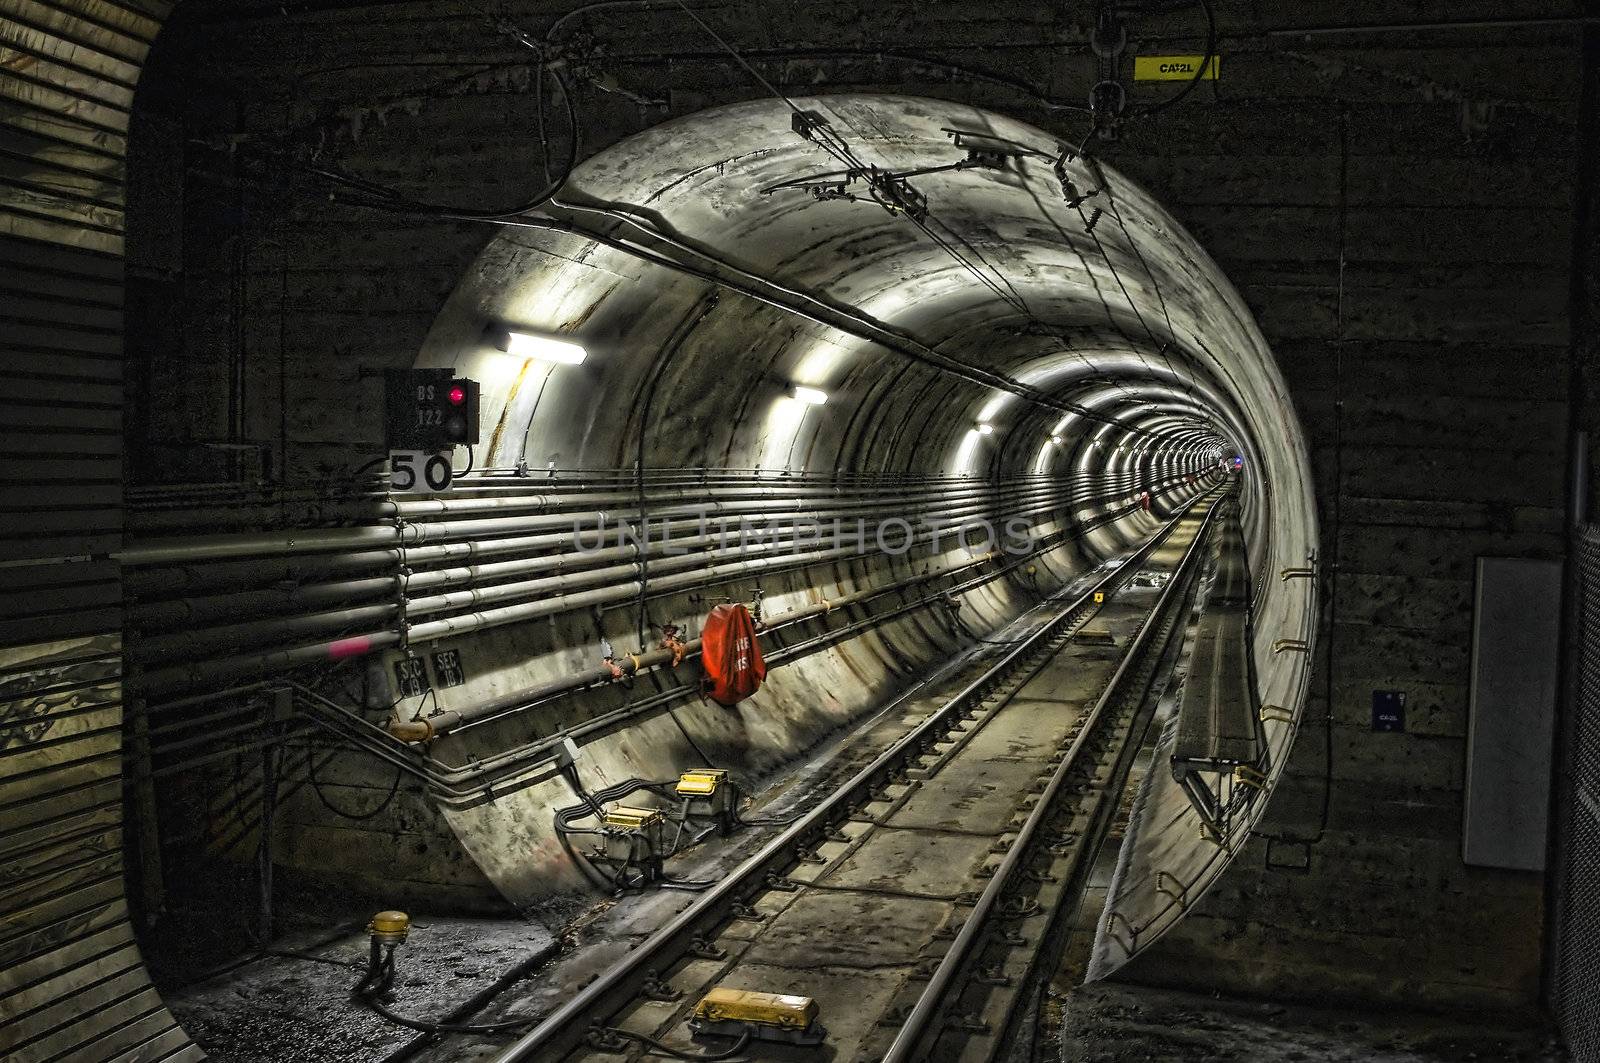 Corona Light Rail Tracks and Tunnel by watamyr